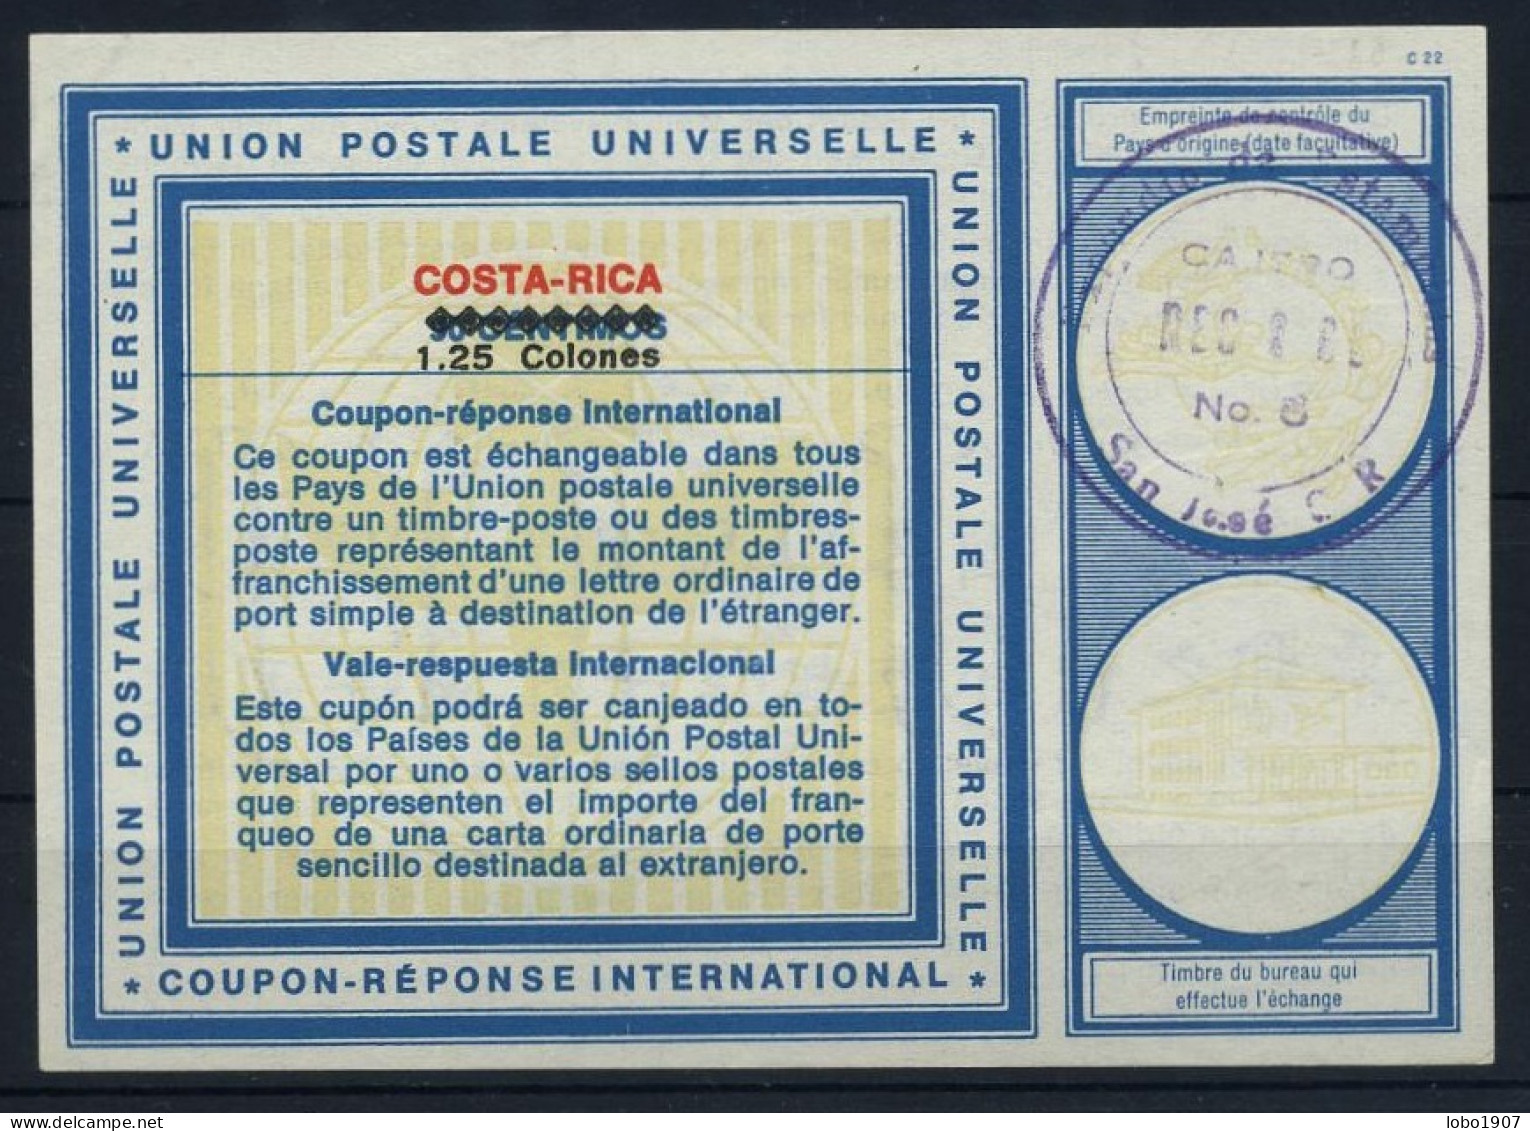 COSTA RICA  Vi18  1.25 Colones / 90 CENTAVOS  Int. Reply Coupon Reponse Antwortschein IAS IRC VALE RESPUESTA   SAN JOSÉ - Costa Rica